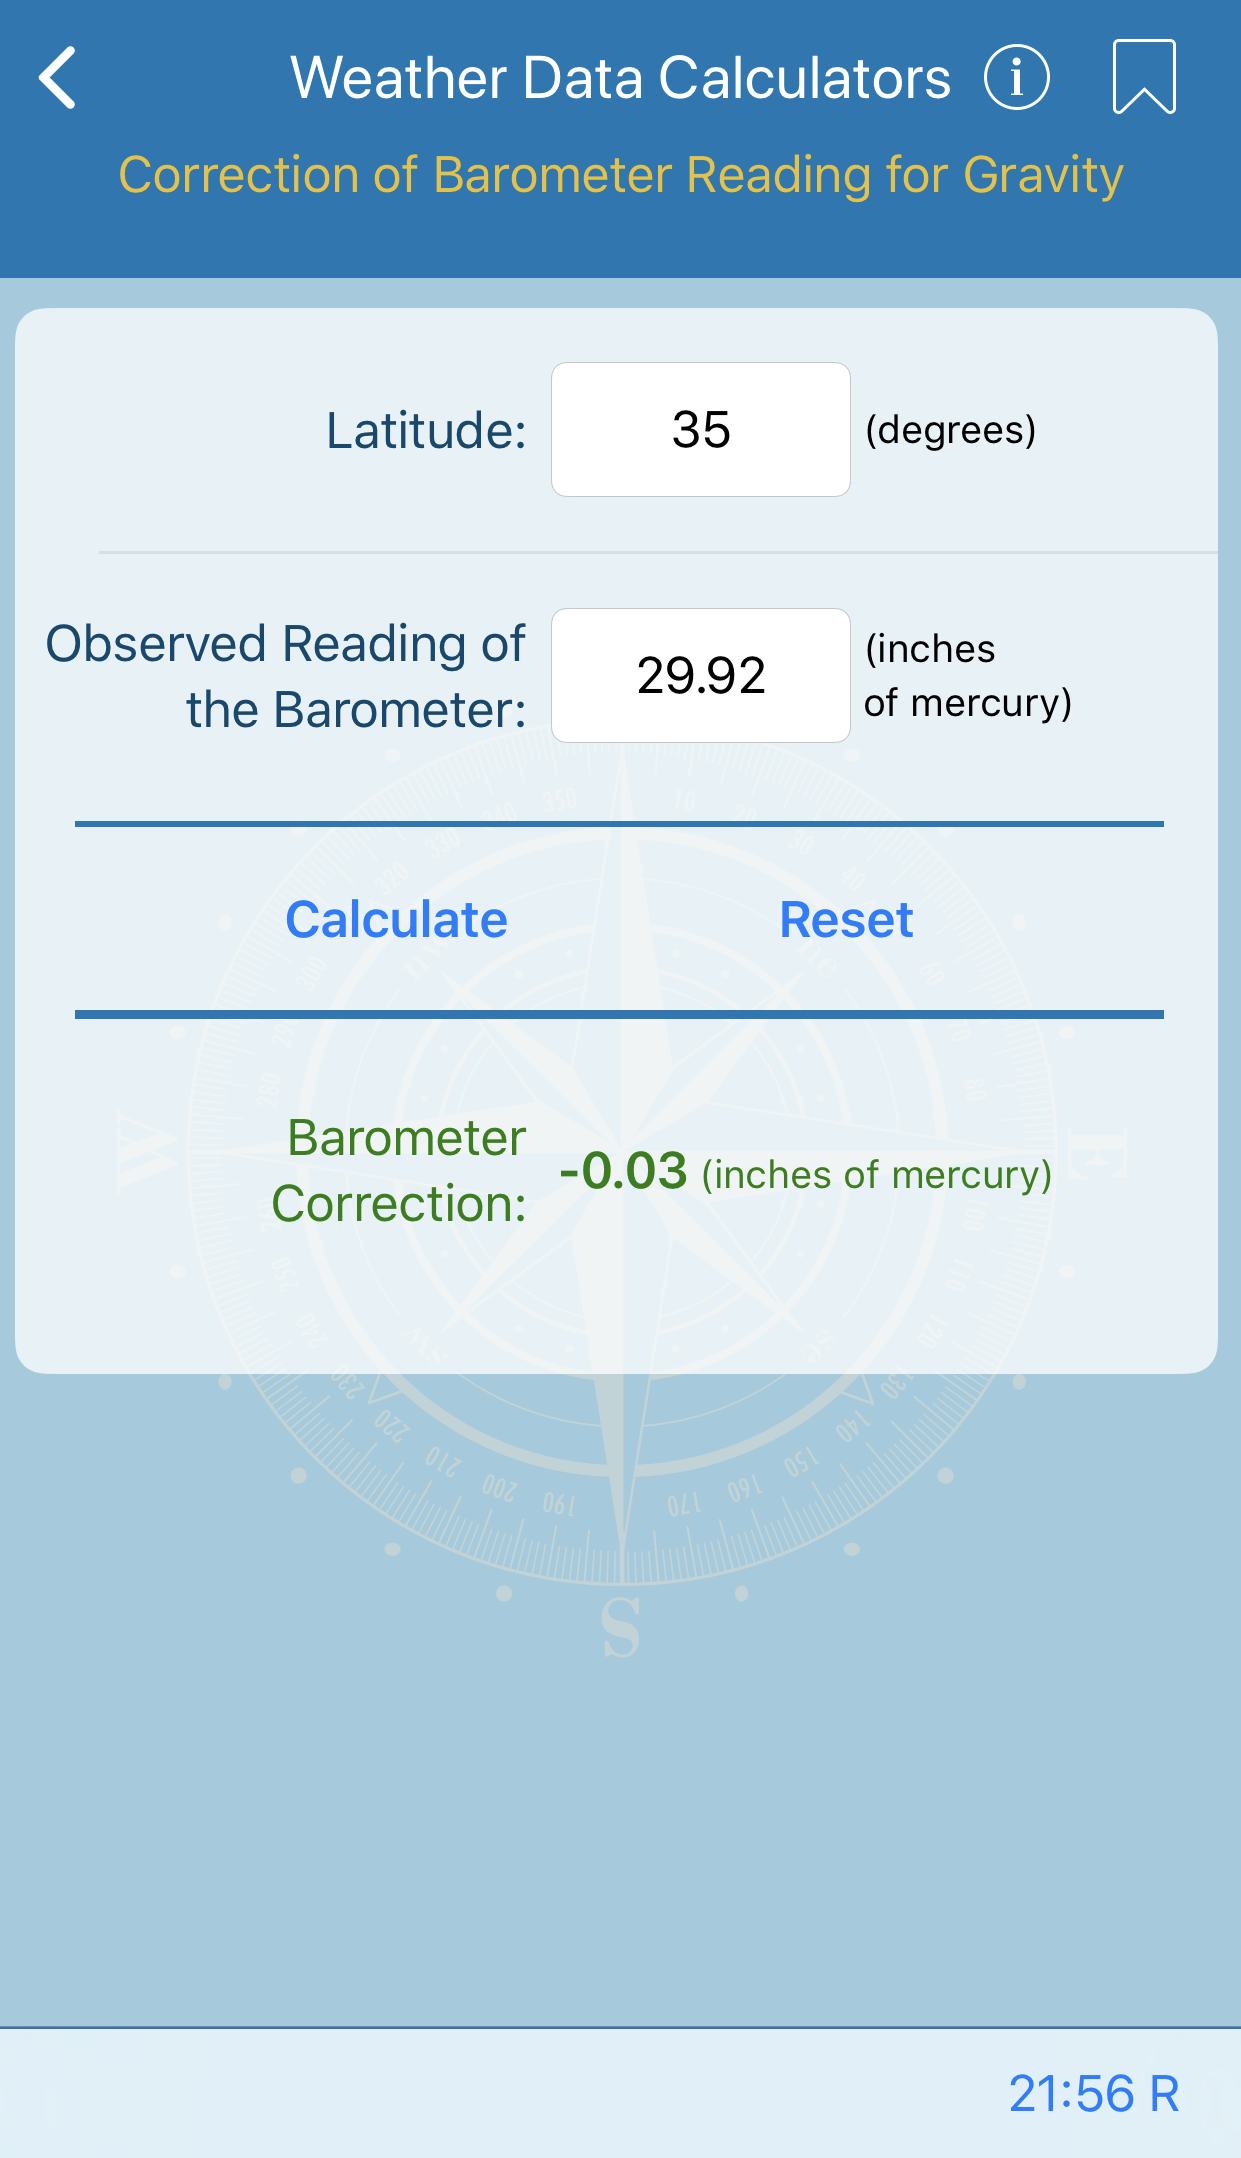 Correction of Barometer Reading for Gravity